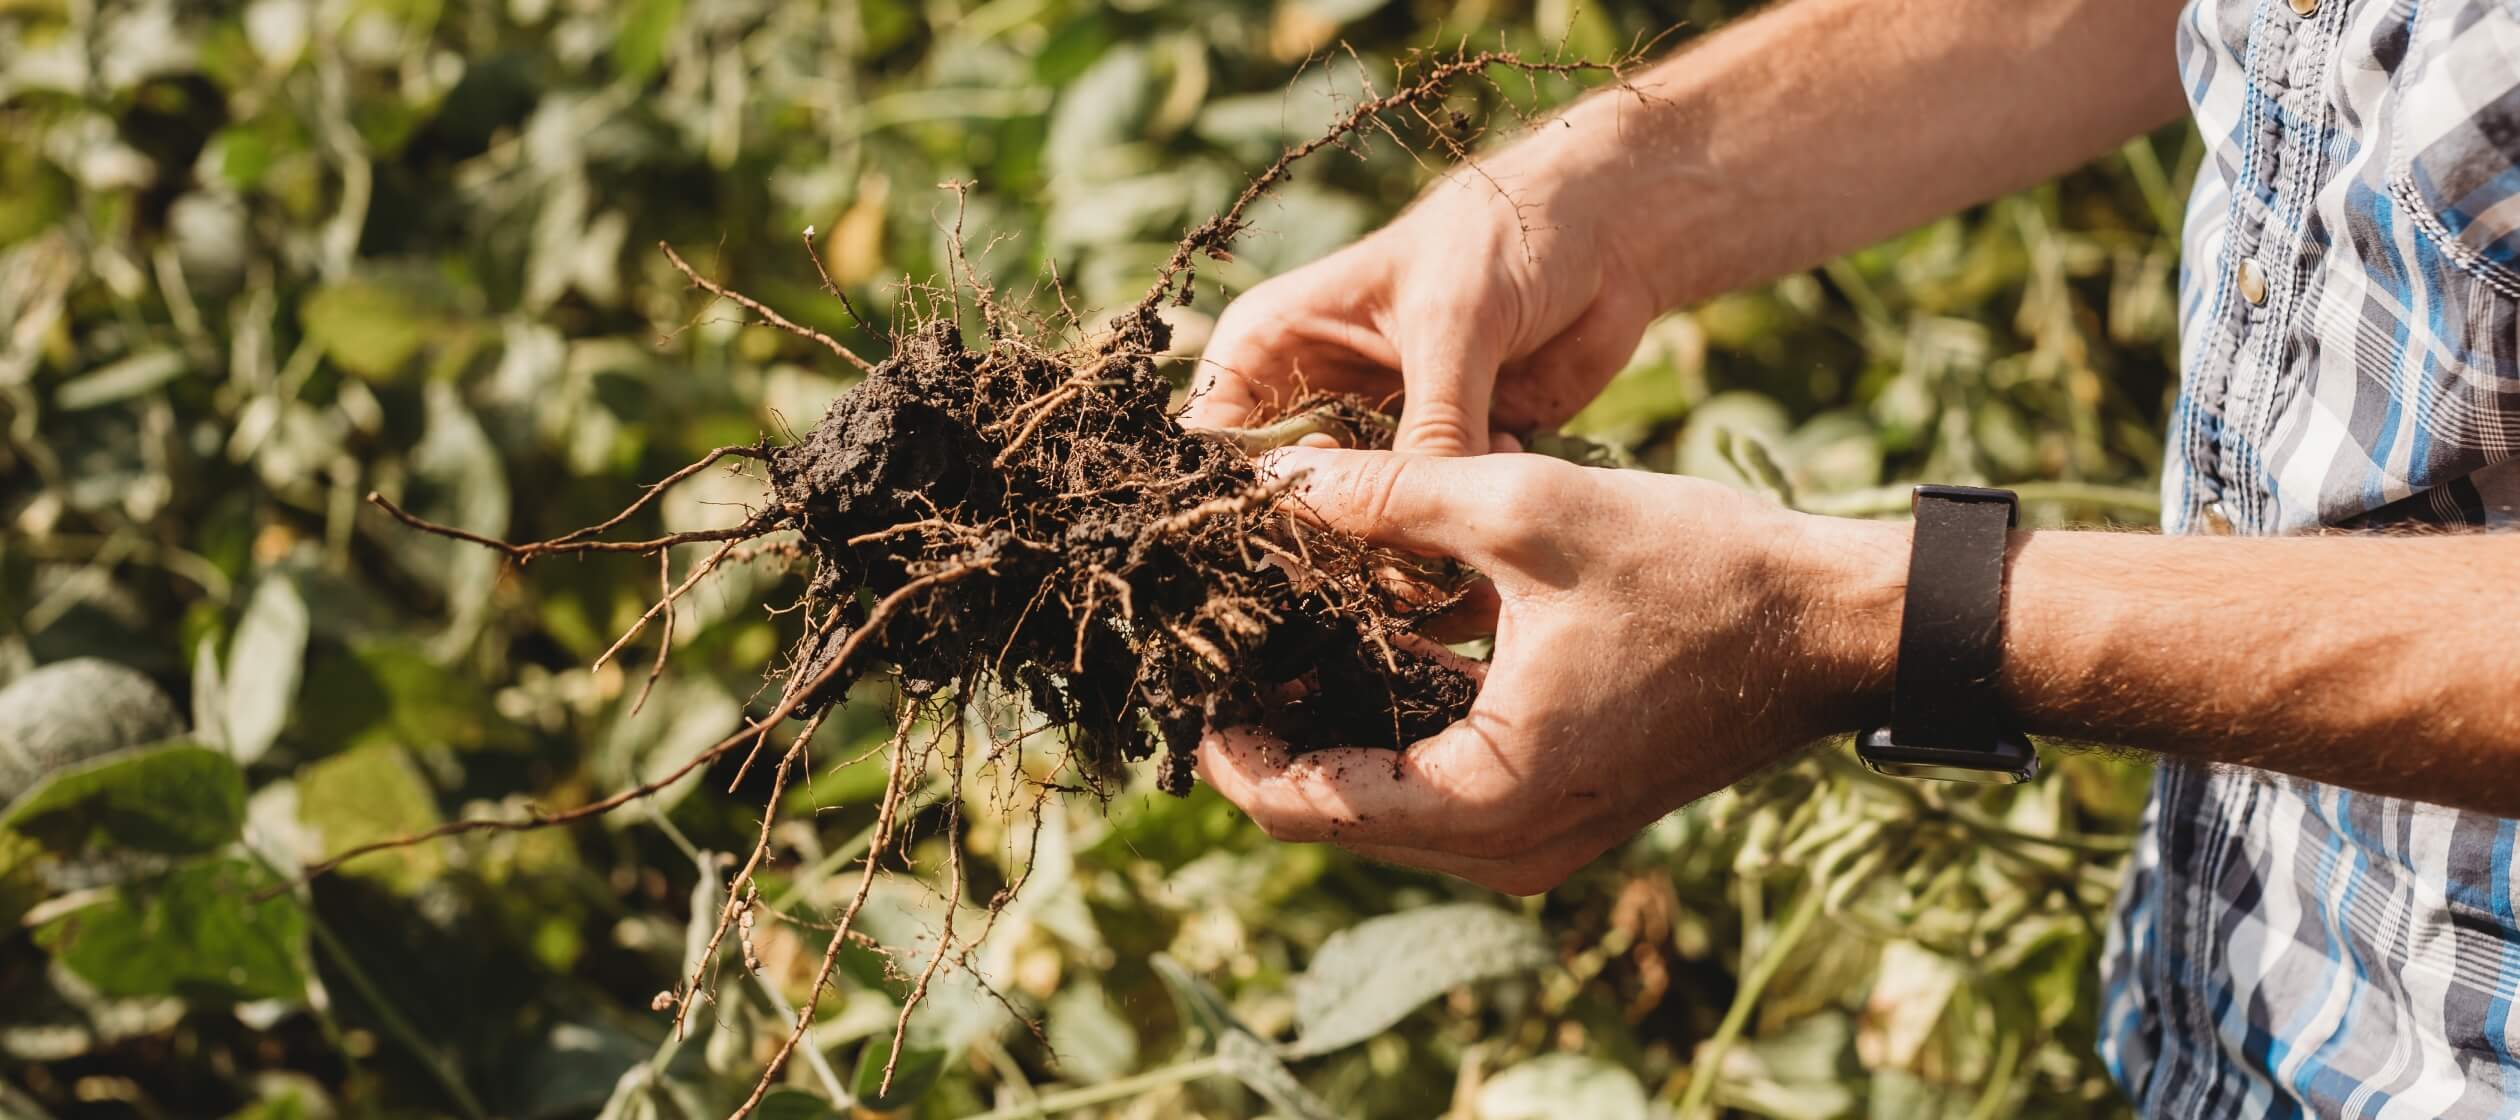 soil-in-hands